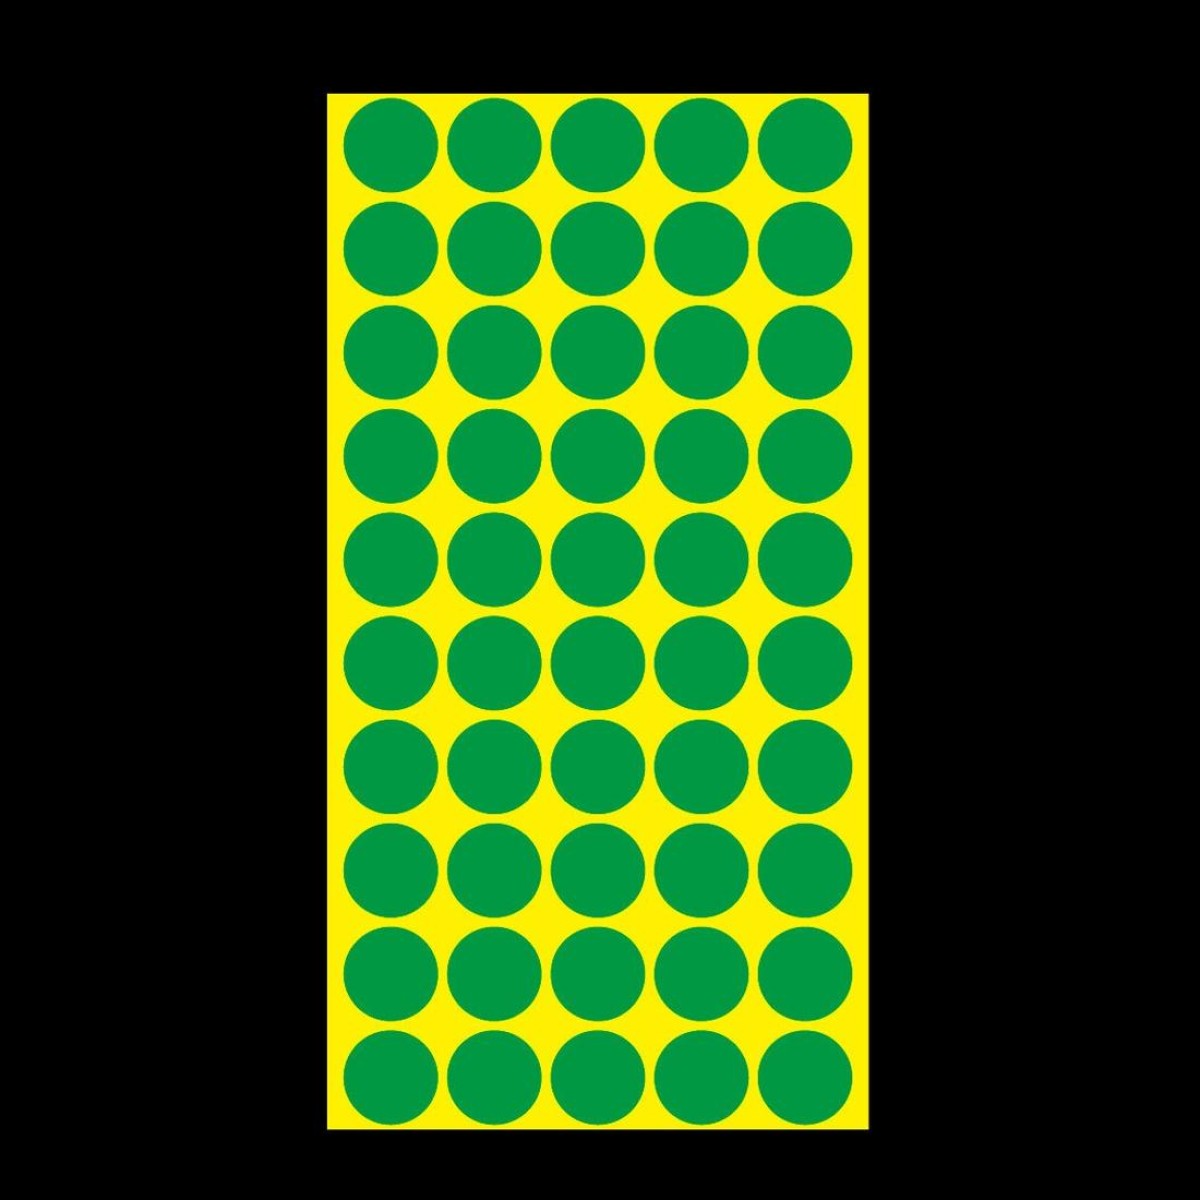 1000 PCS Round Shape Self-adhesive Colorful Mark Sticker Mark Label(Green)